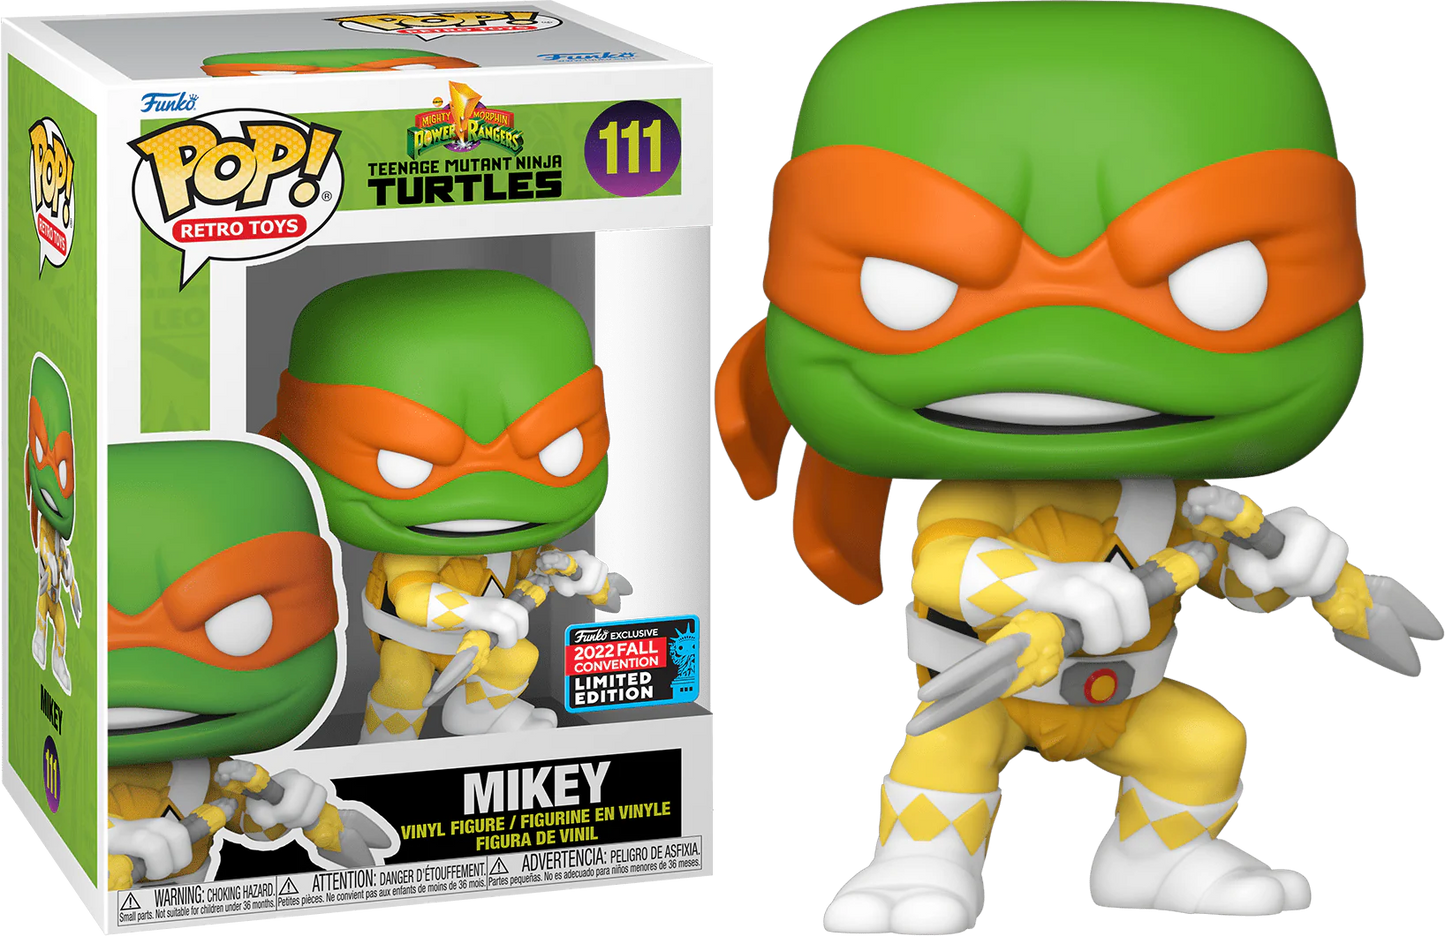 Funko Pop! - Mighty Morphin Power Ranger Teenage Mutant Ninja Turtles - Mikey 111